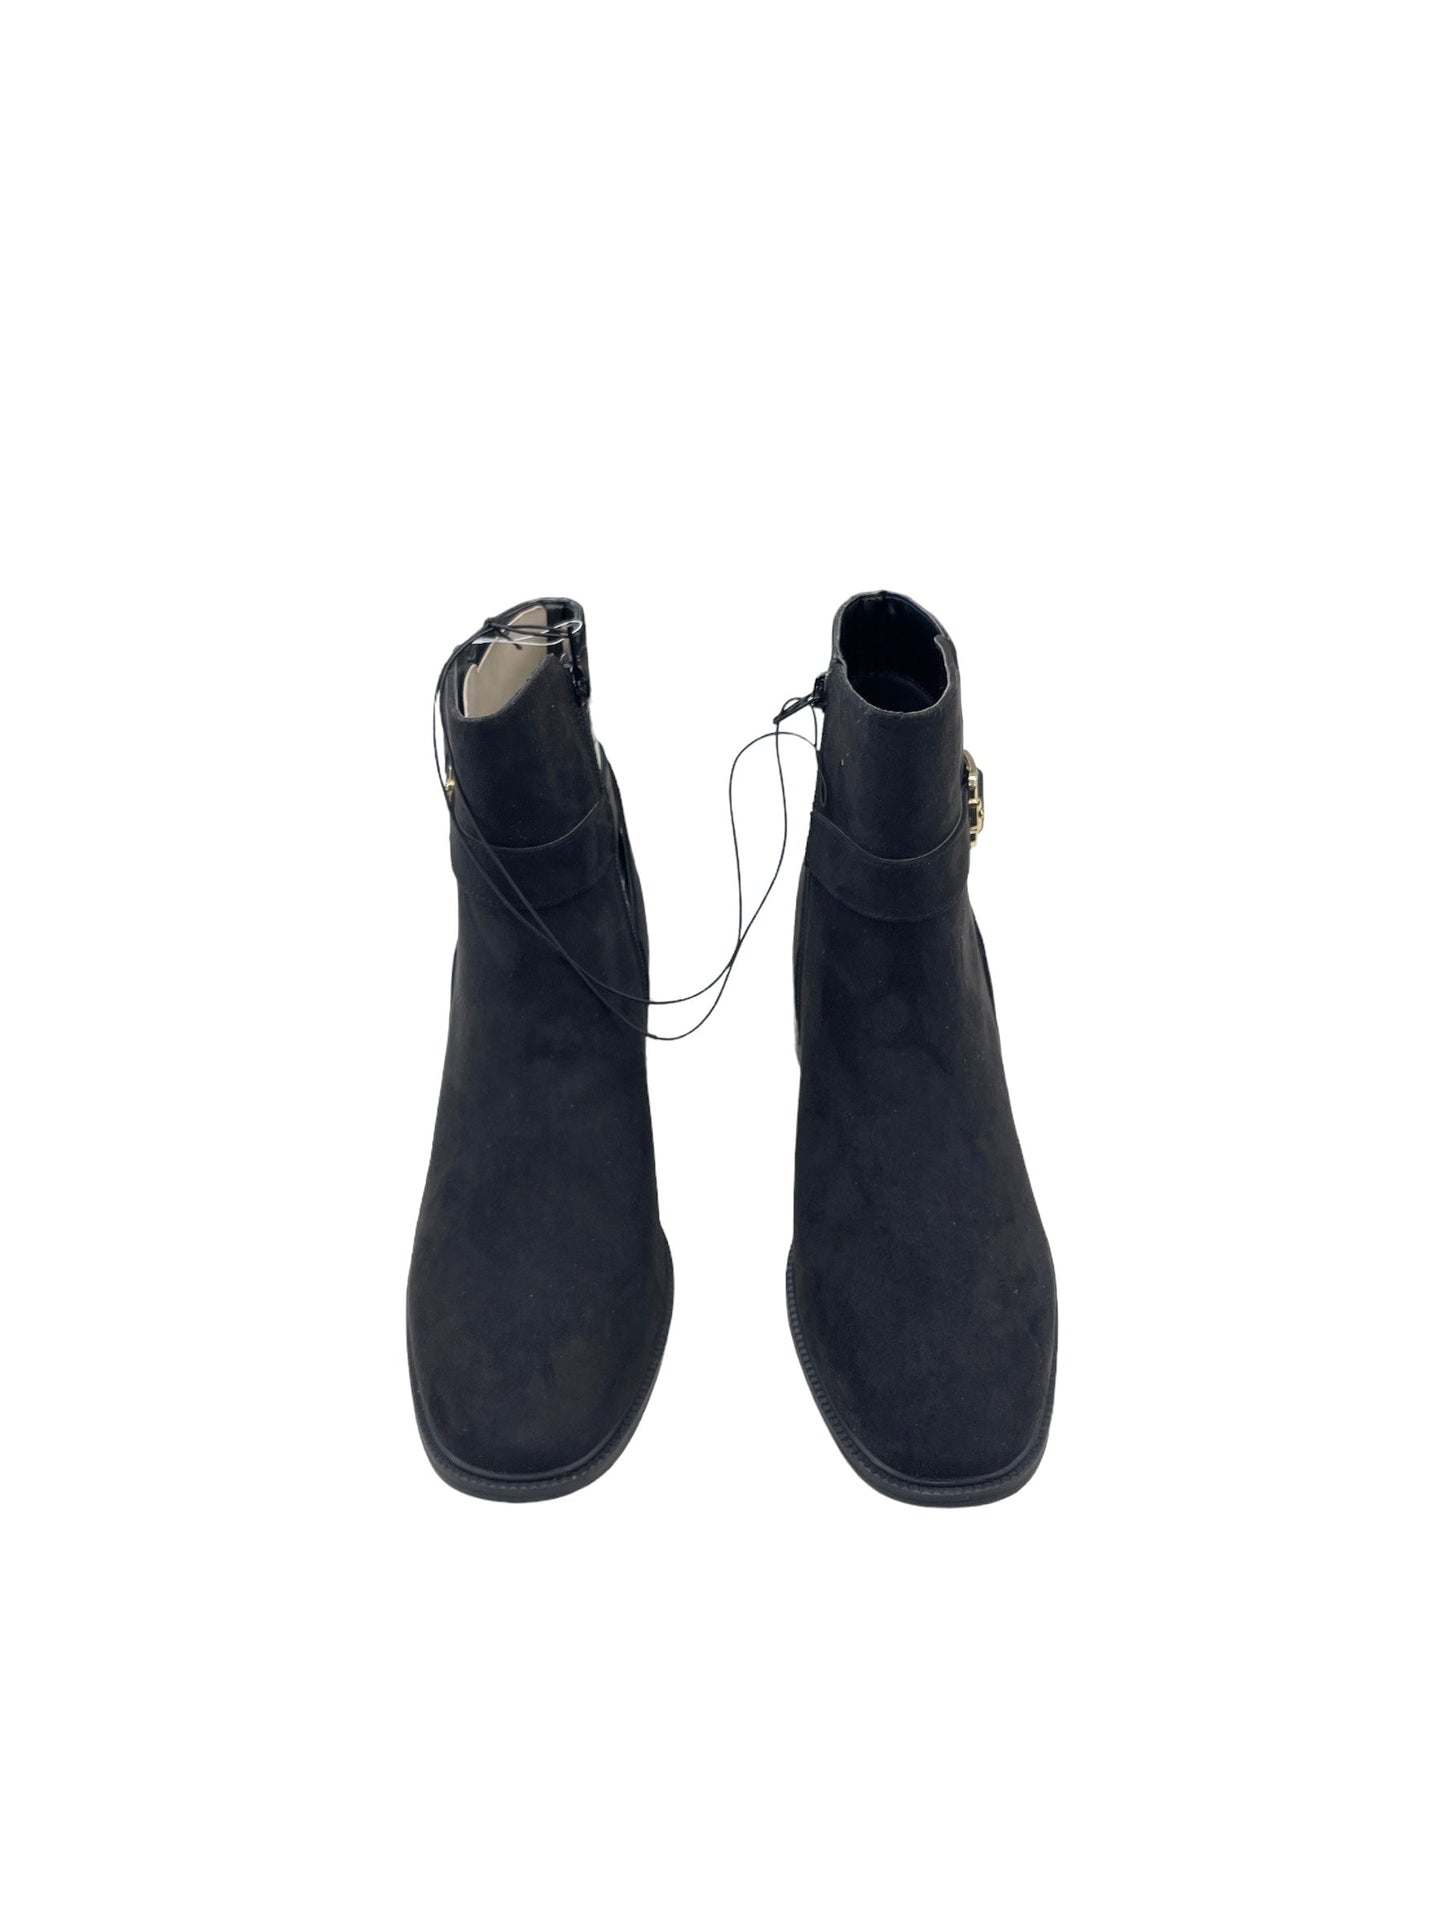 Boots Ankle Flats By Liz Claiborne  Size: 9